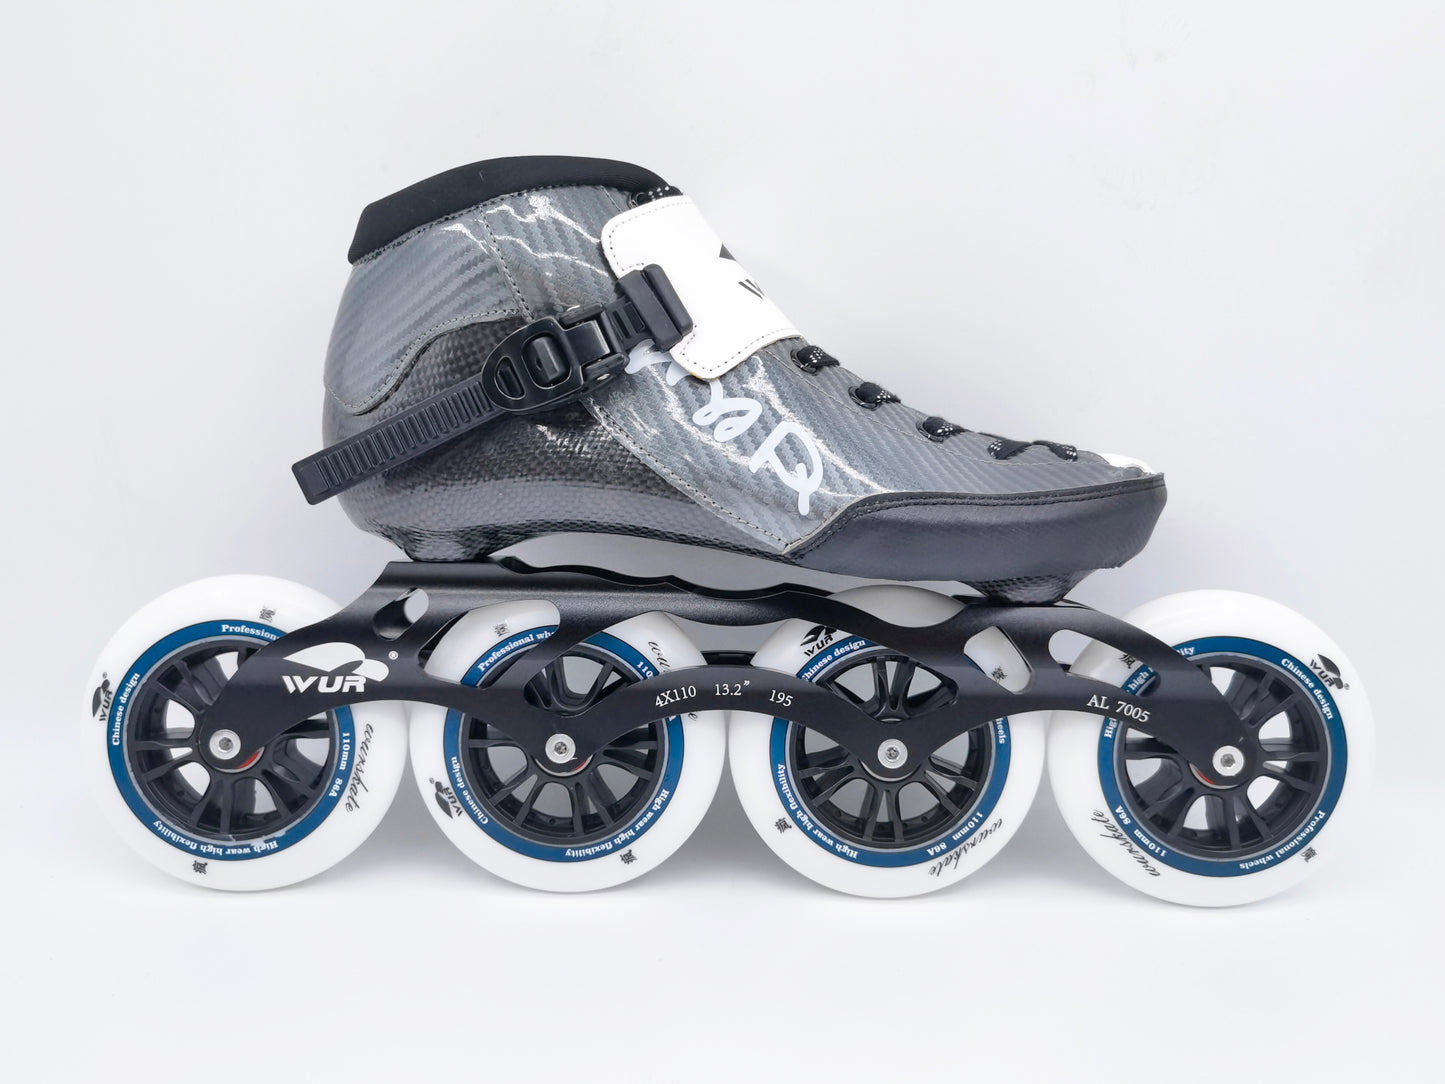 WUR skate speed skate model CX gray